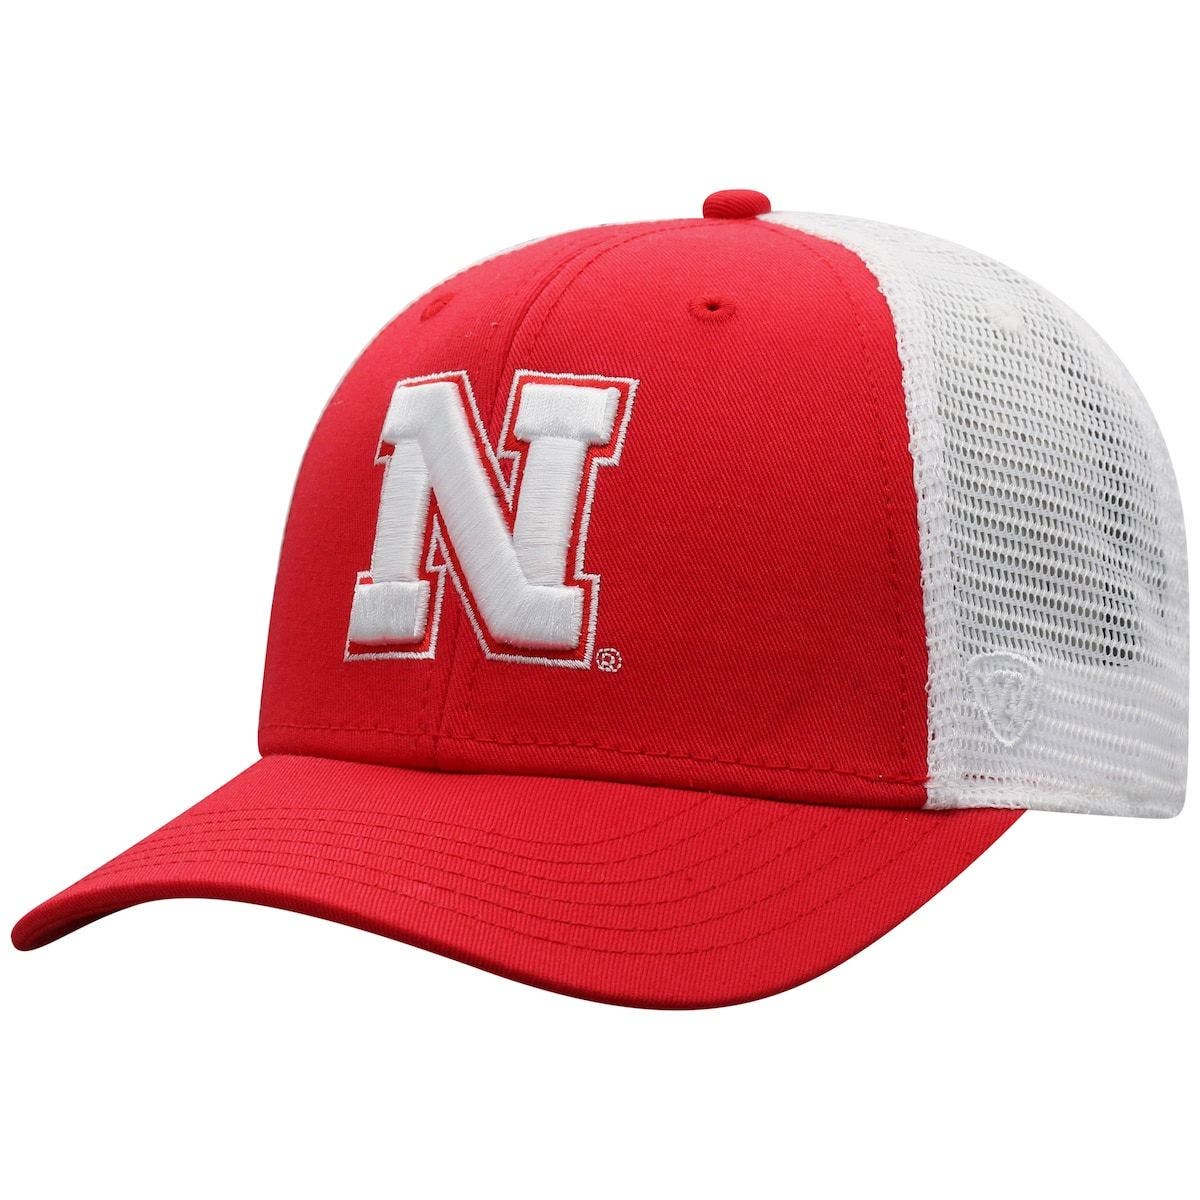 Top-Of-The-World Womens Nebraska Huskers Strapback Cap Hat New 